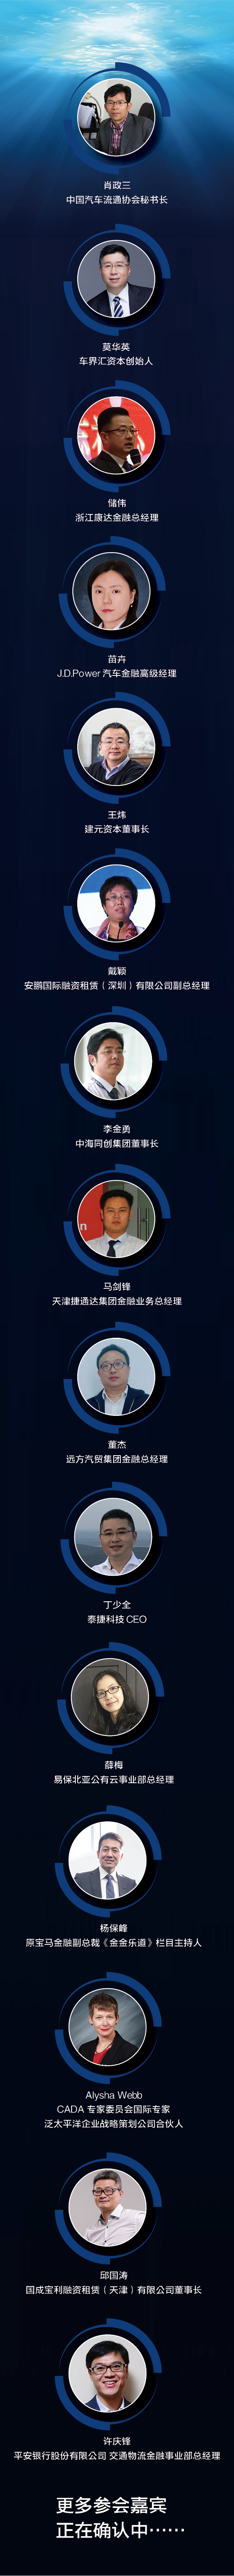 2018 SG-Auto北京国际汽车经销商金融&保险峰会